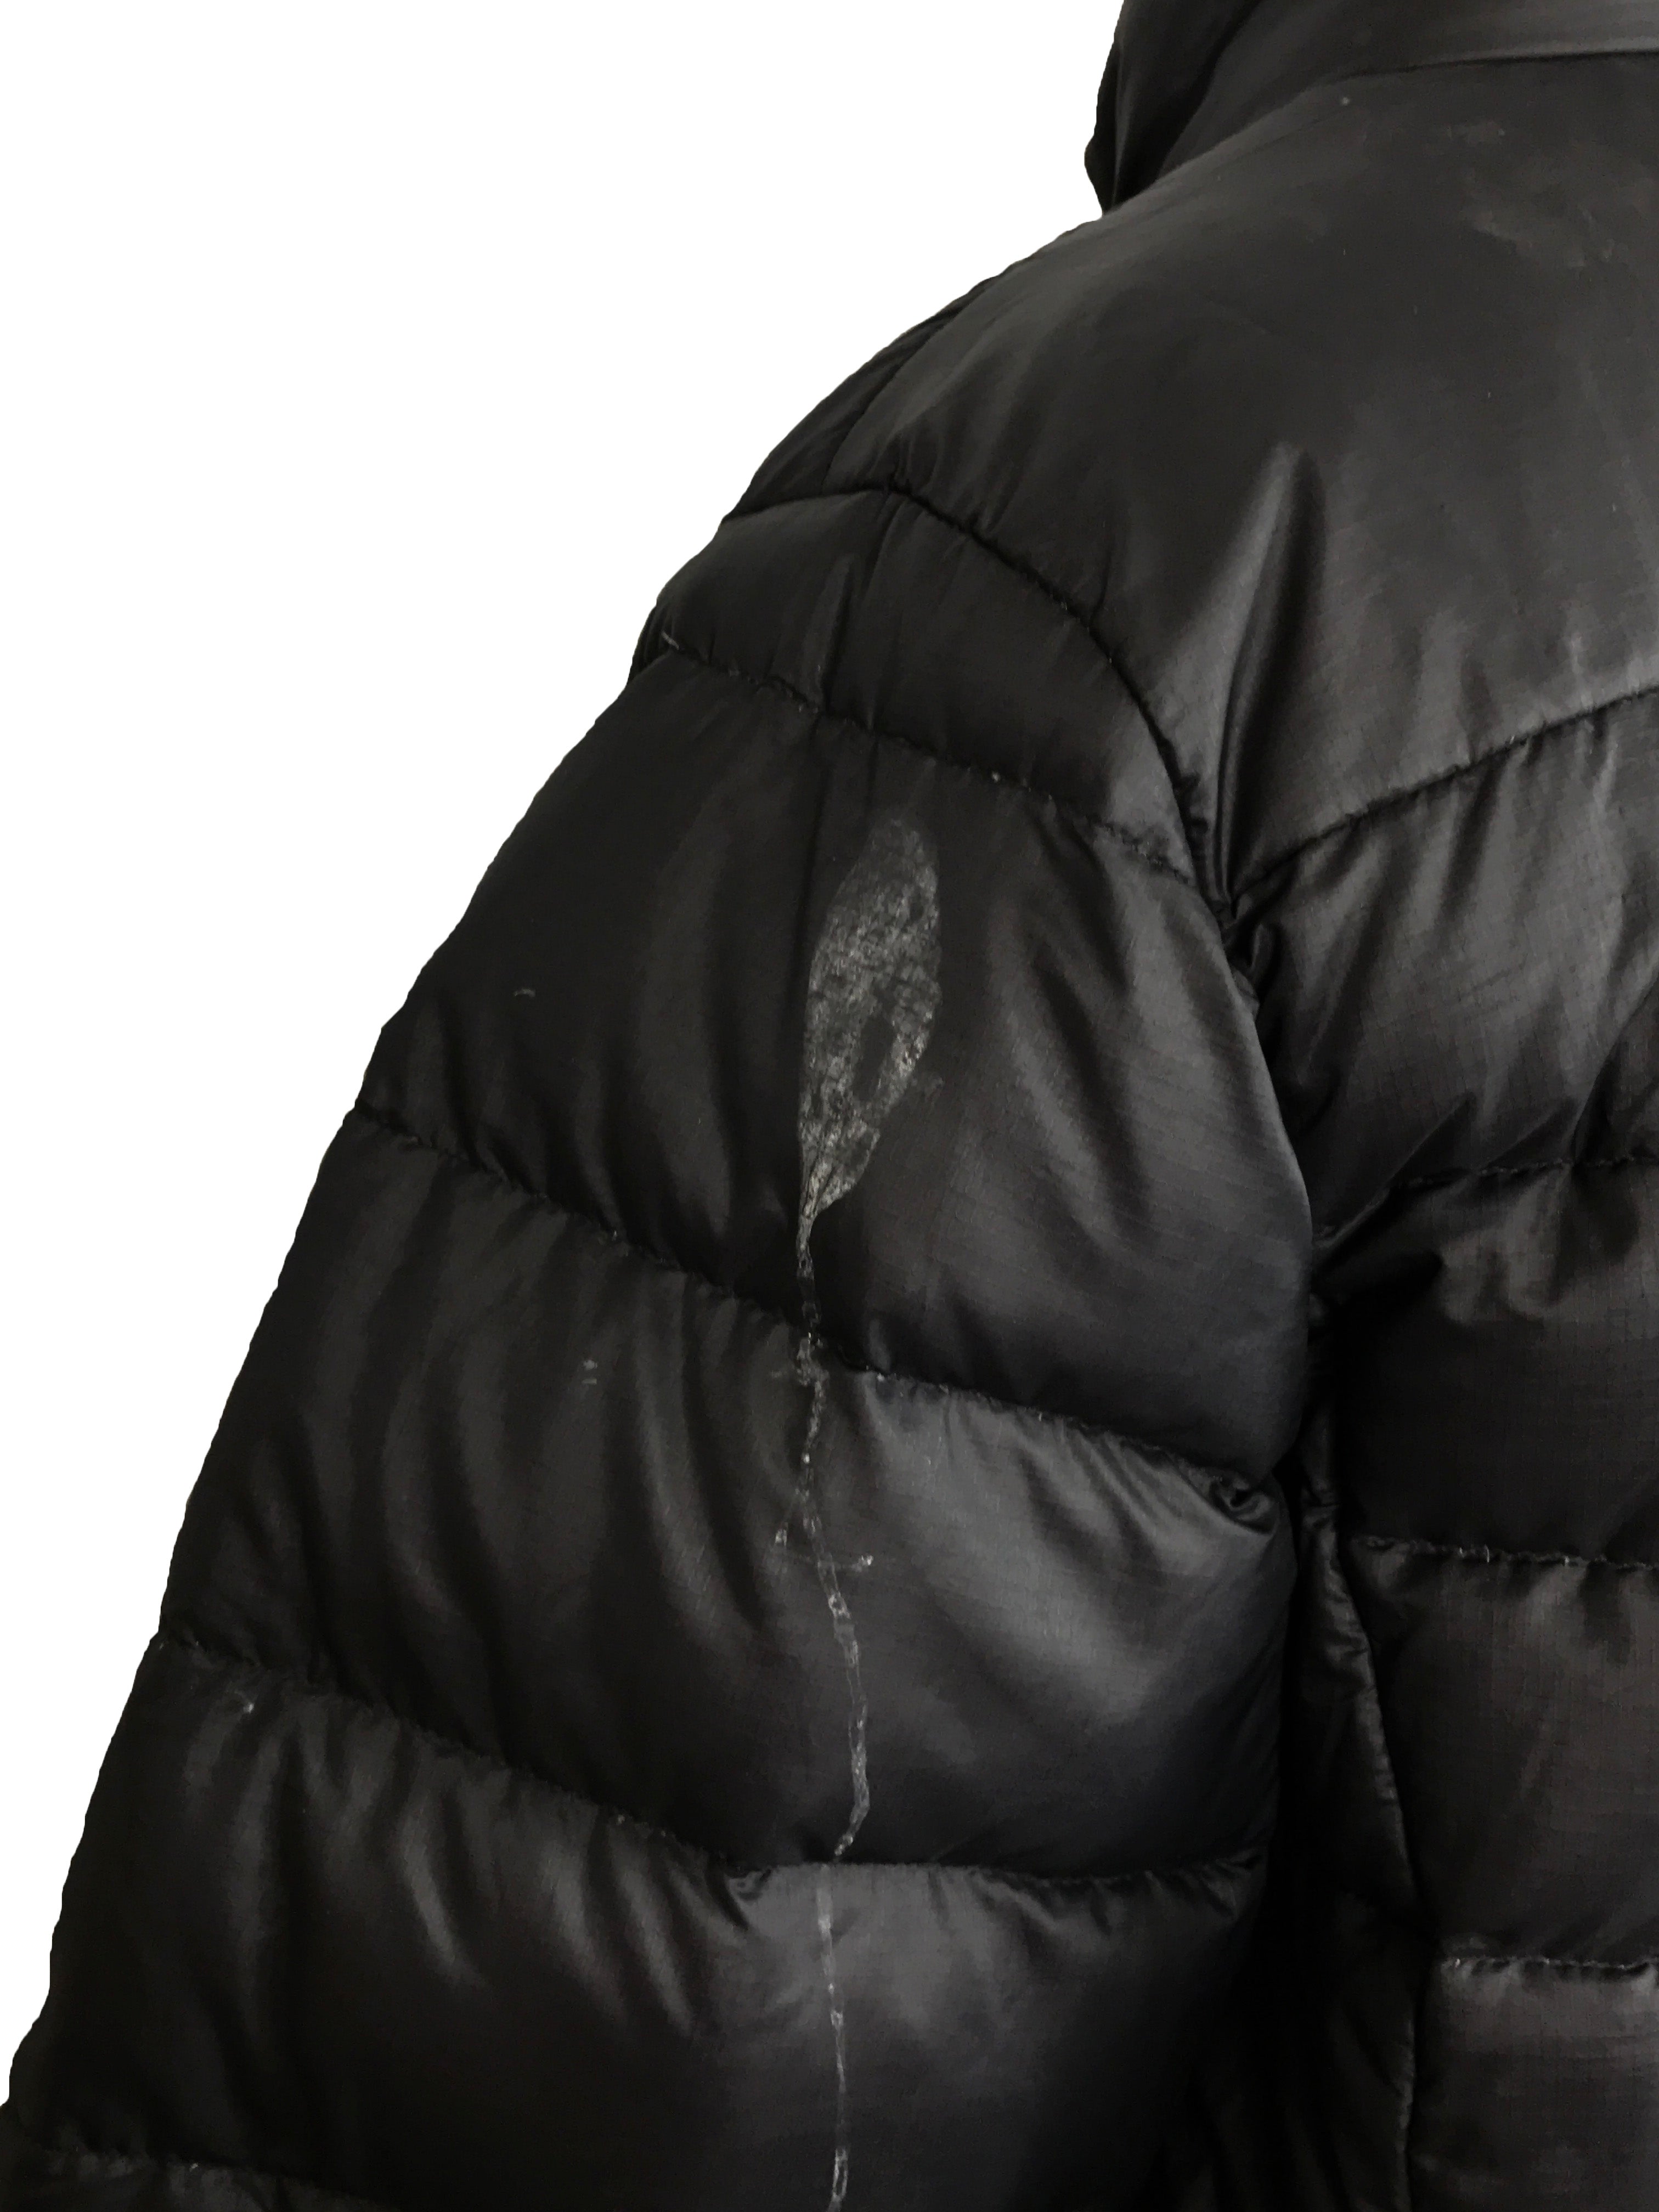 The North Face Black Puffer Coat Men's Size L